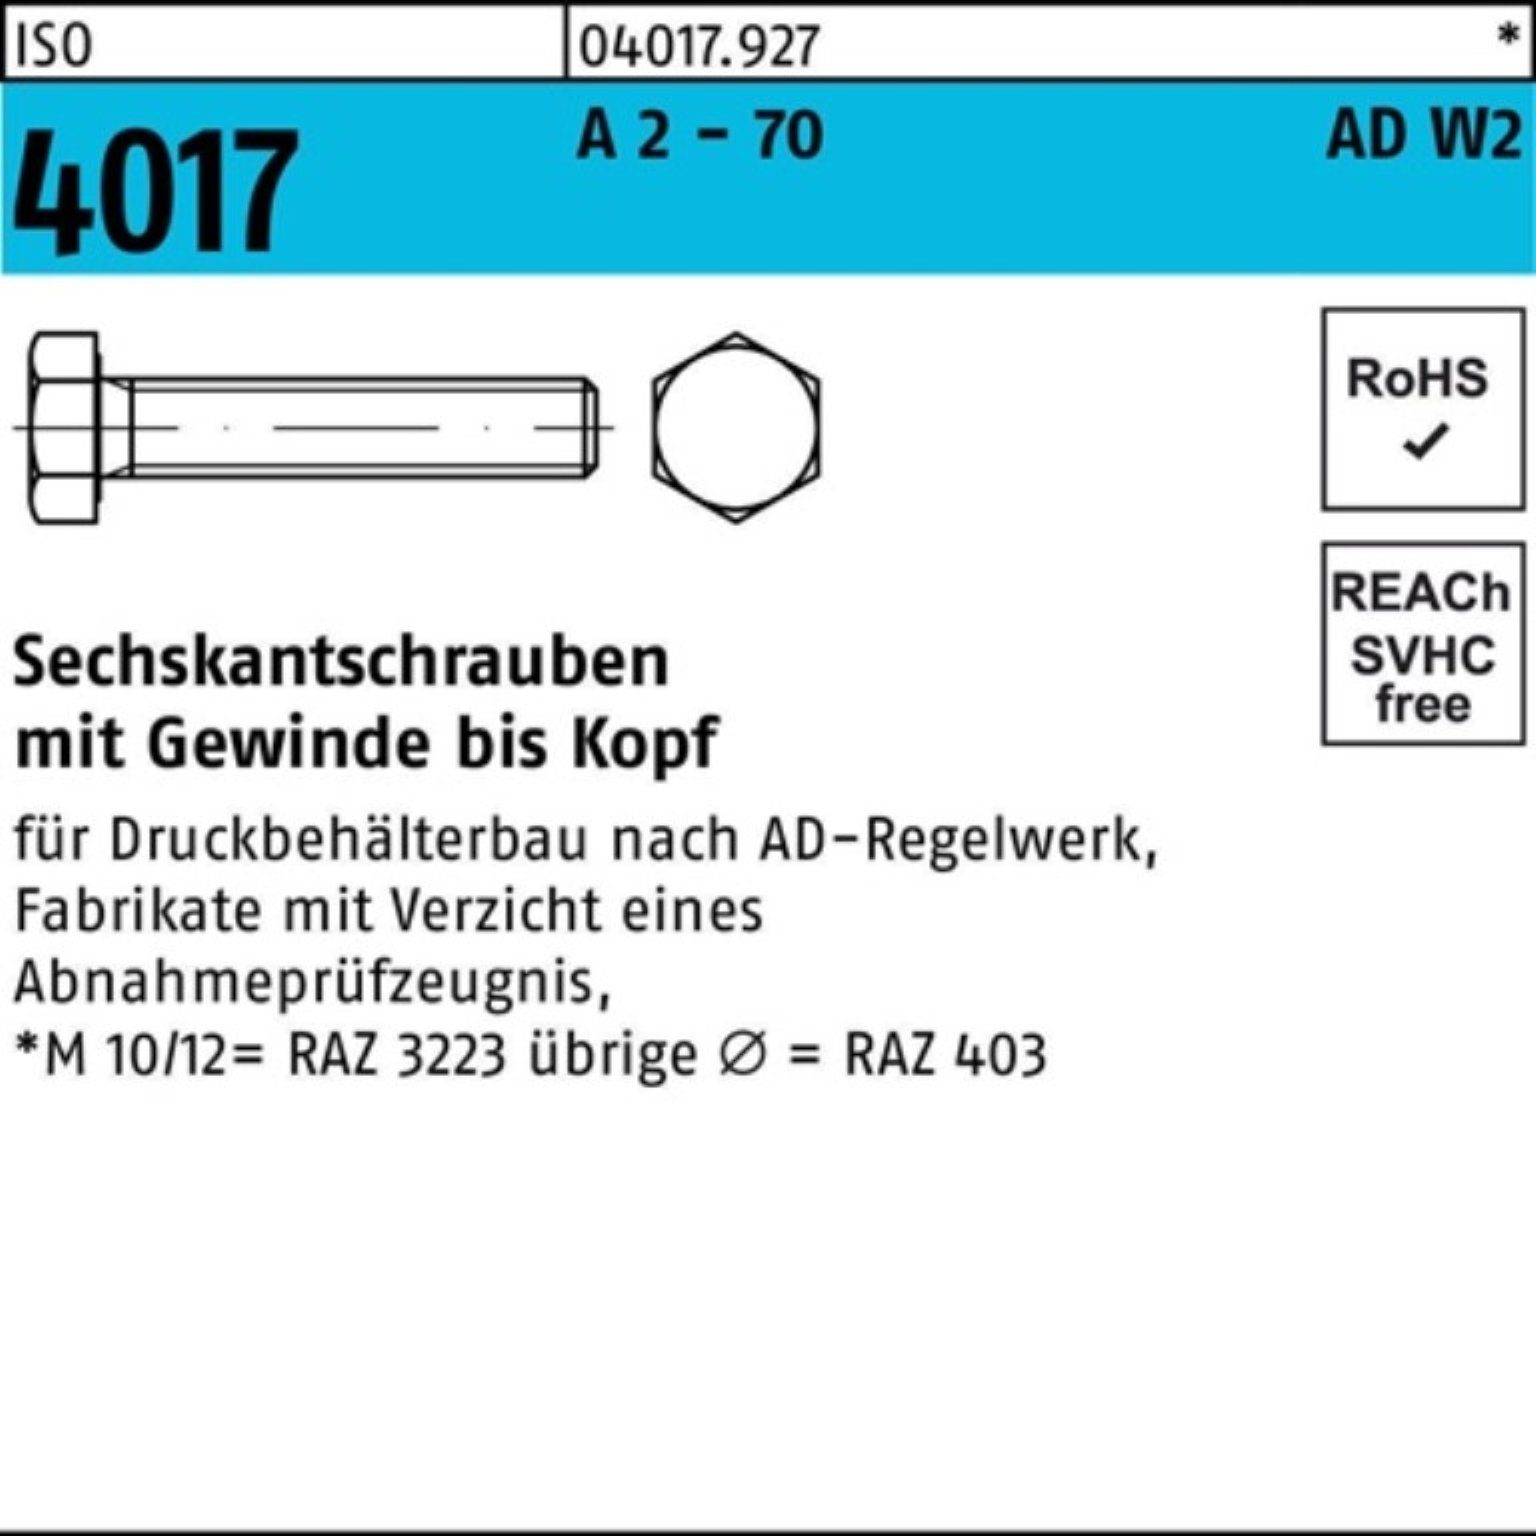 Bufab Sechskantschraube 100er Pack Sechskantschraube ISO 4017 VG M12x 35 A 2 - 70 AD-W2 50 St